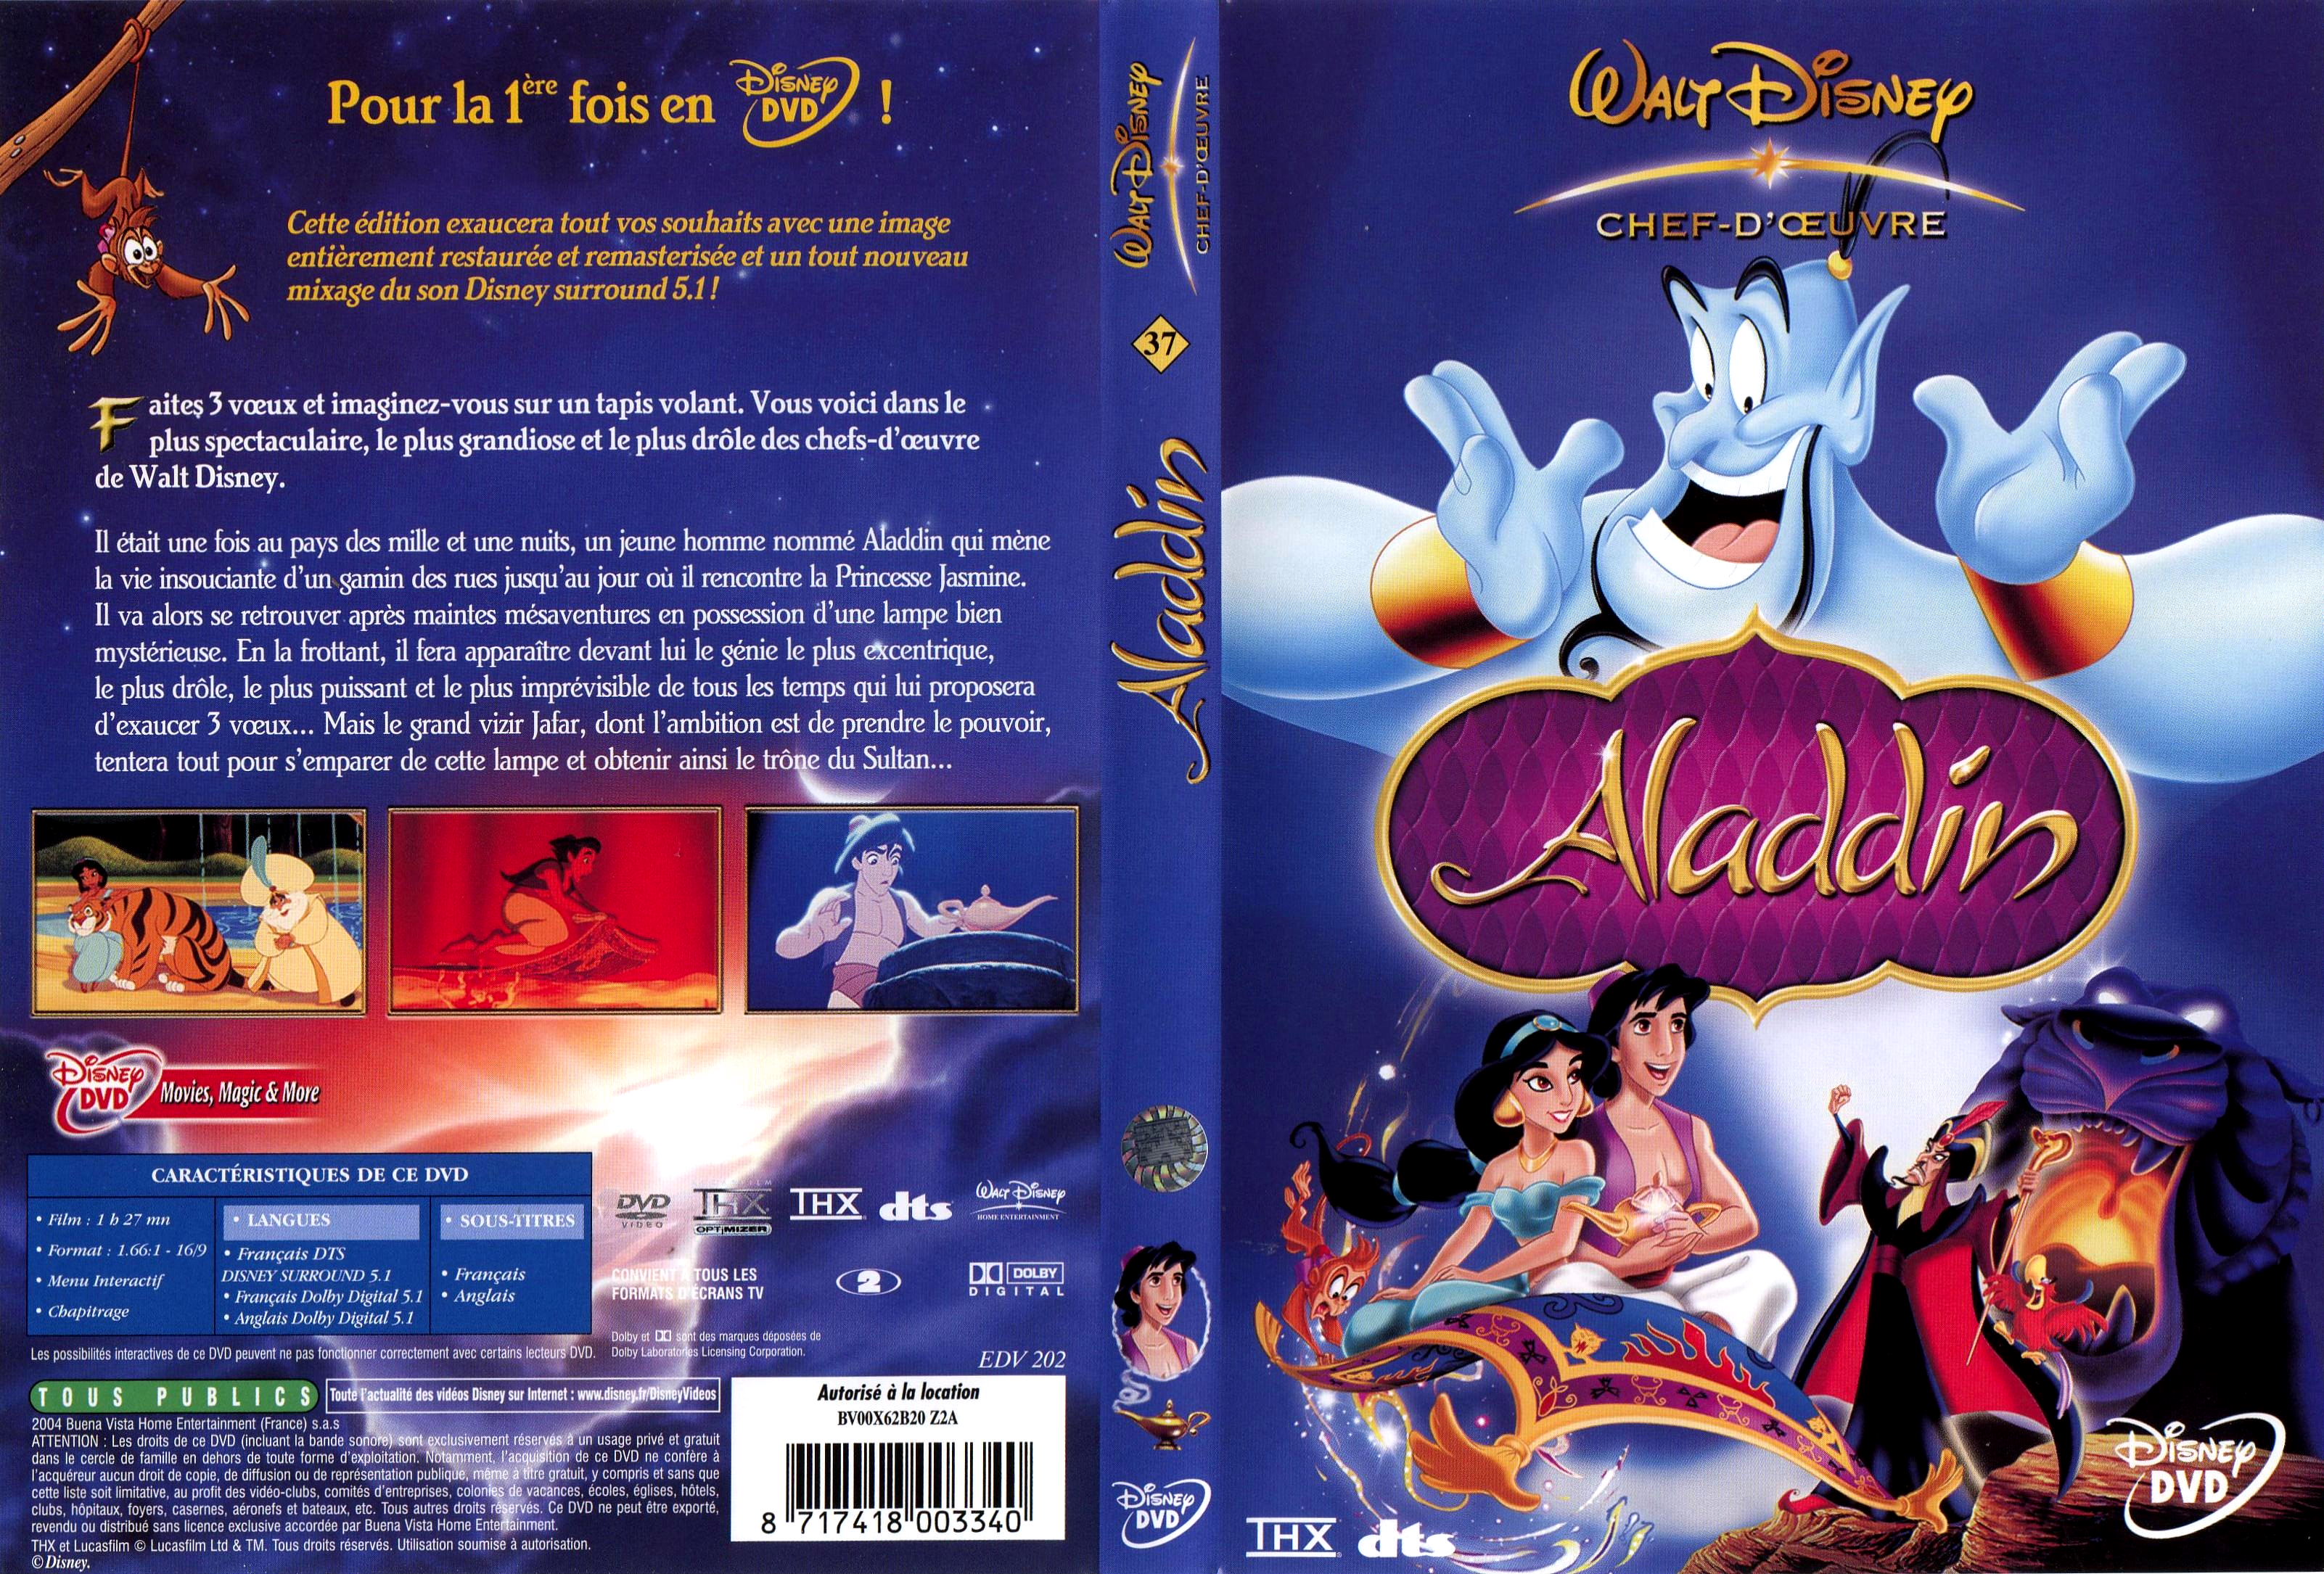 Jaquette DVD Aladdin v2